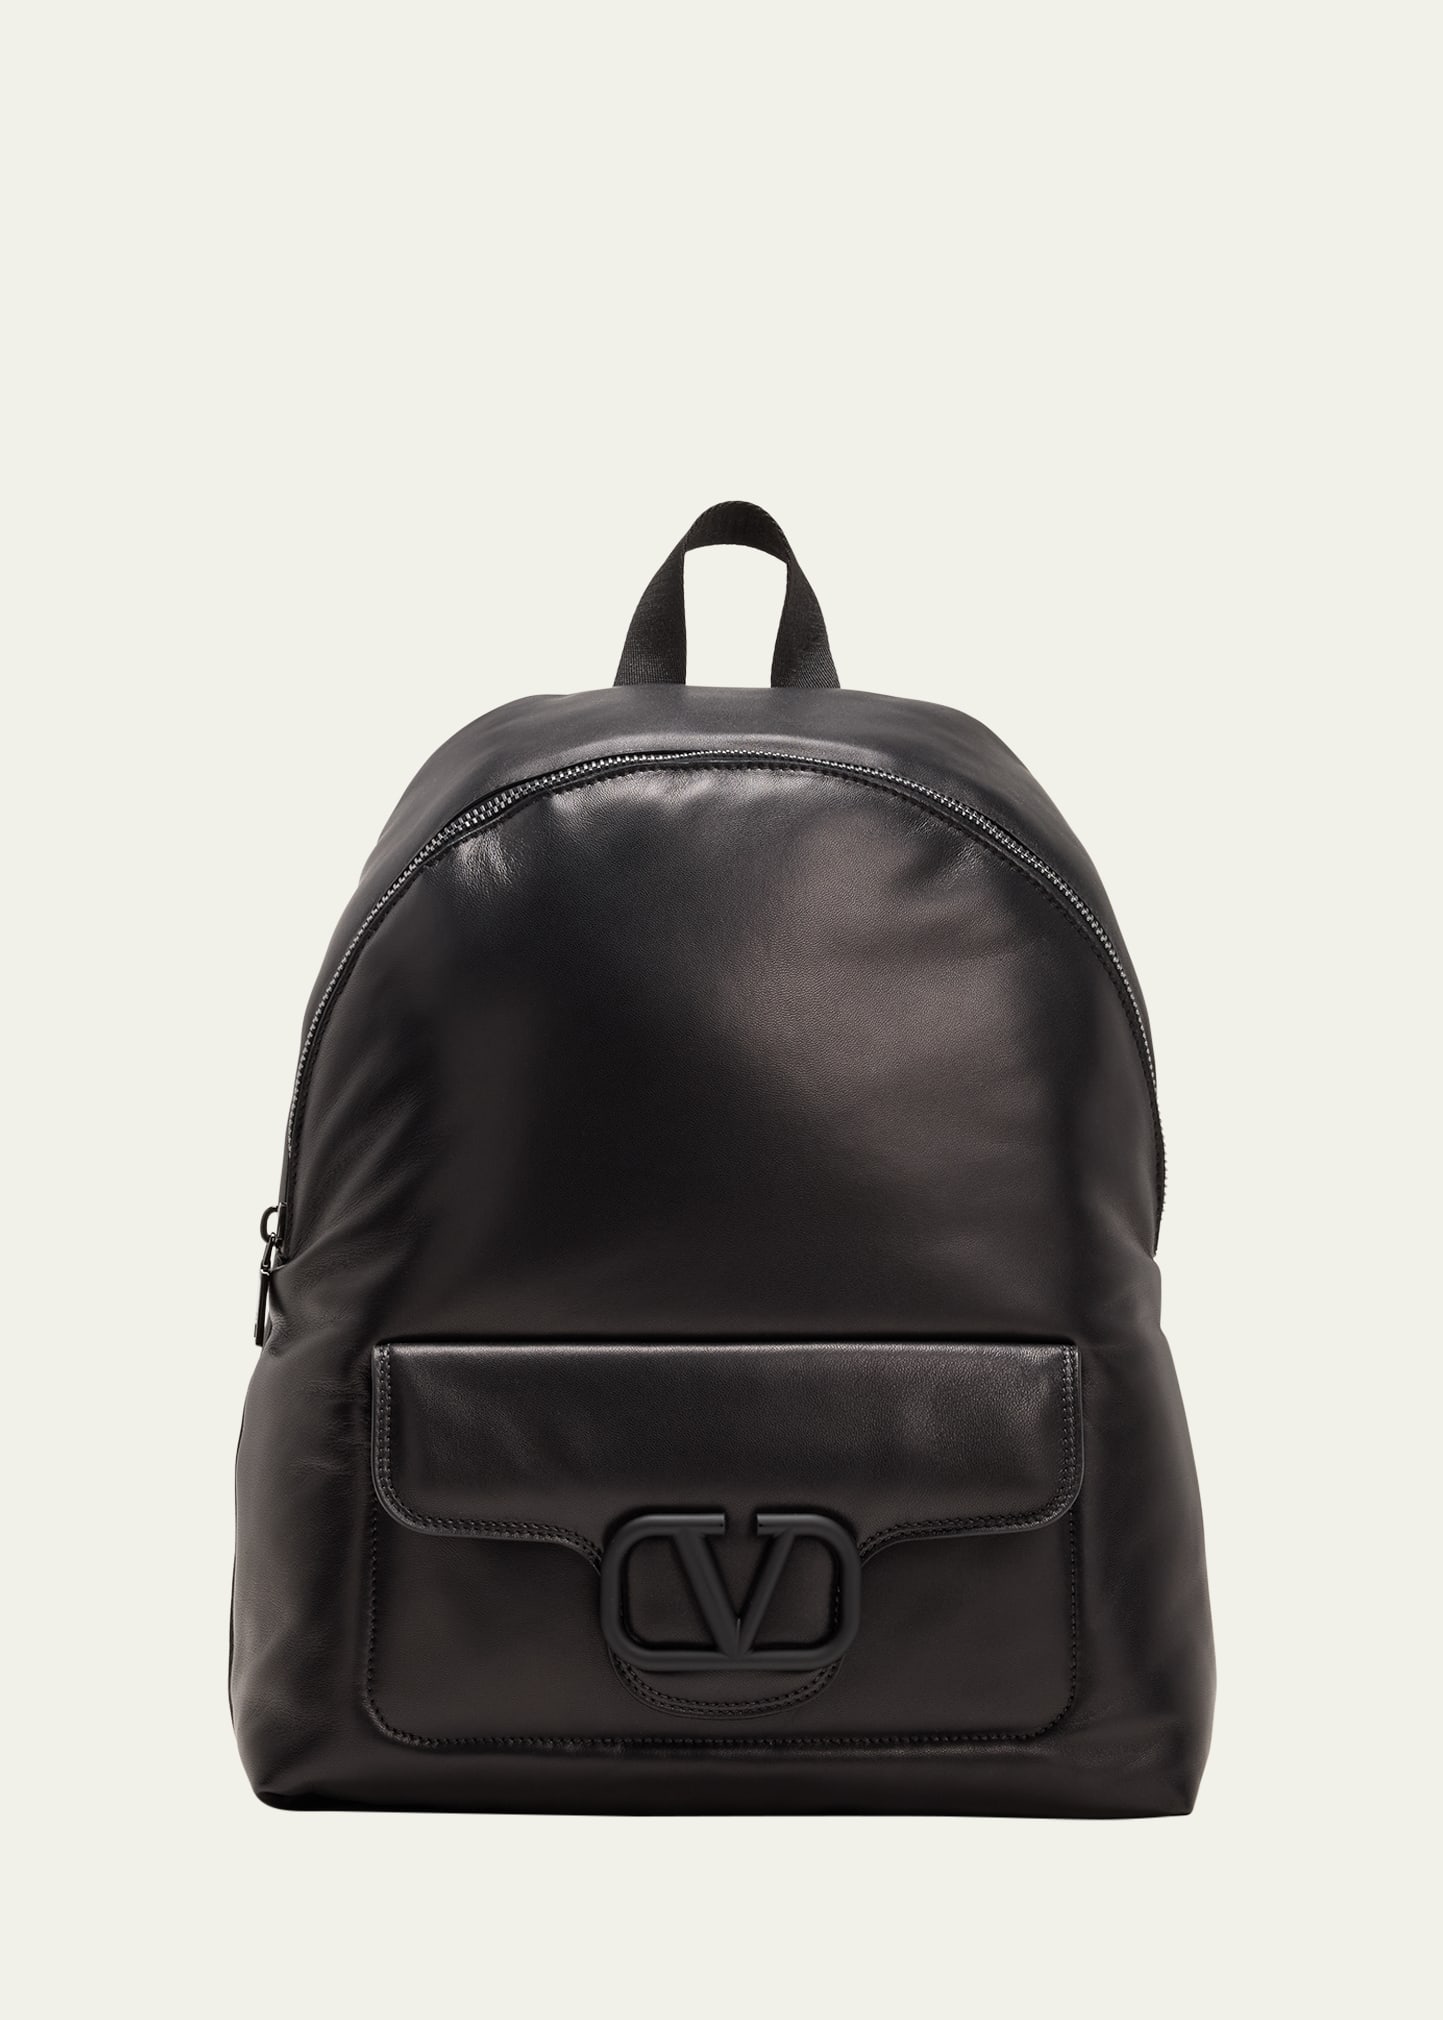 Valentino Garavani Men's Noir Leather Backpack In Nero